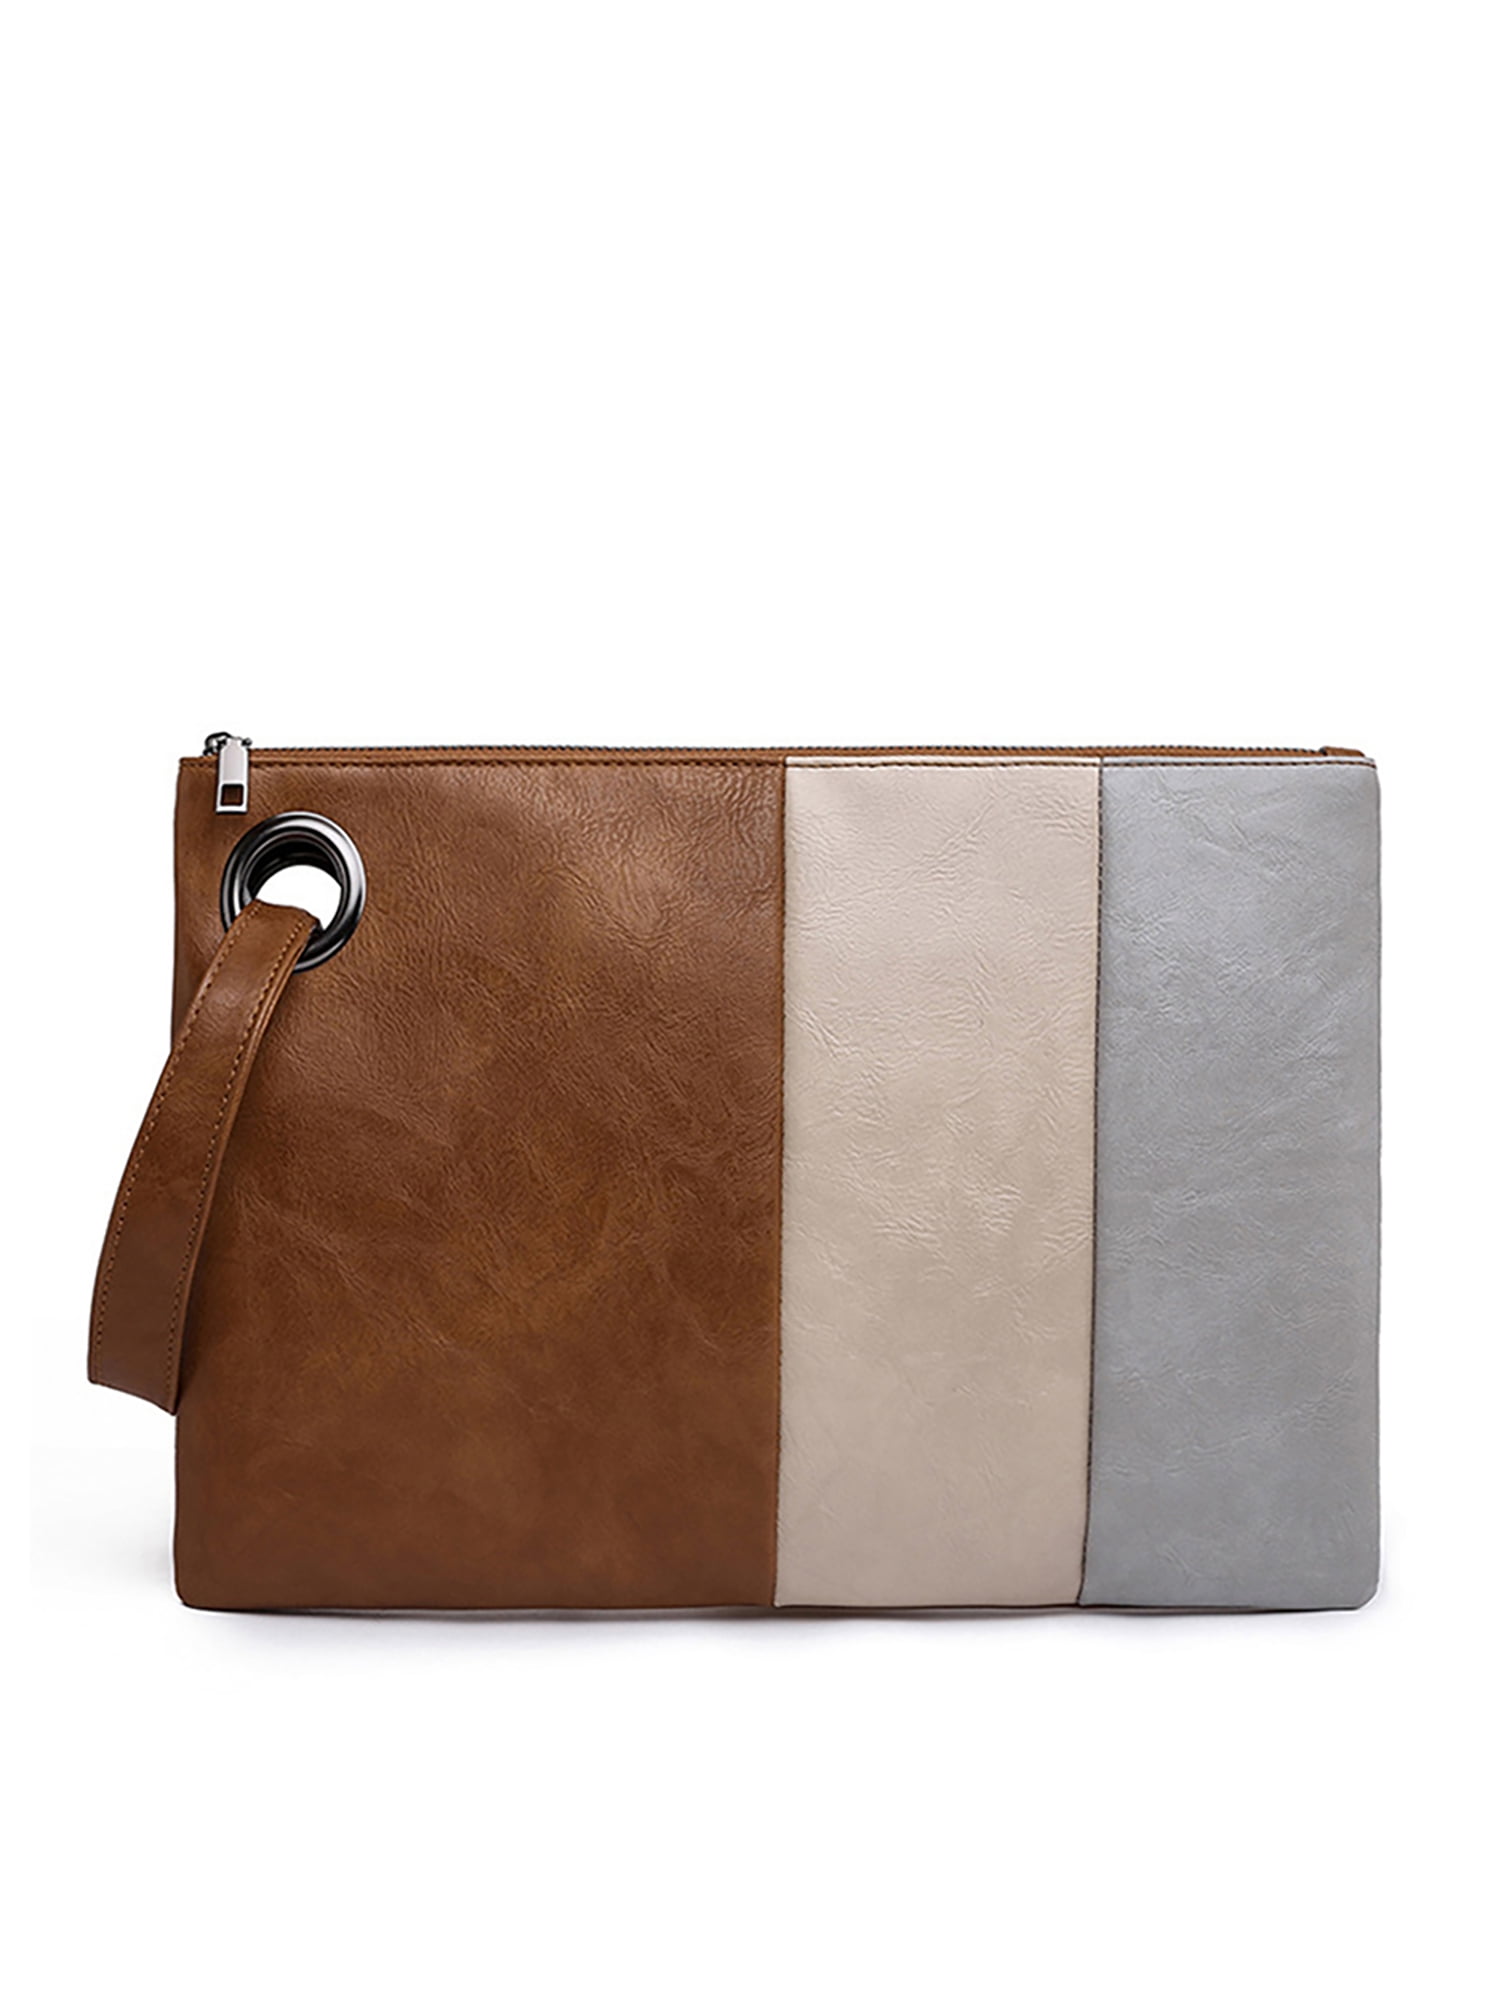 Classic Womens Clutch Bags Wallet Handbag Ladies Fashion Mens Clutch Bag  Soft Leather Fold Messenger Bag Handbag Designer Bags Shoulder Bag #8822  Women Bags From 22,22 €